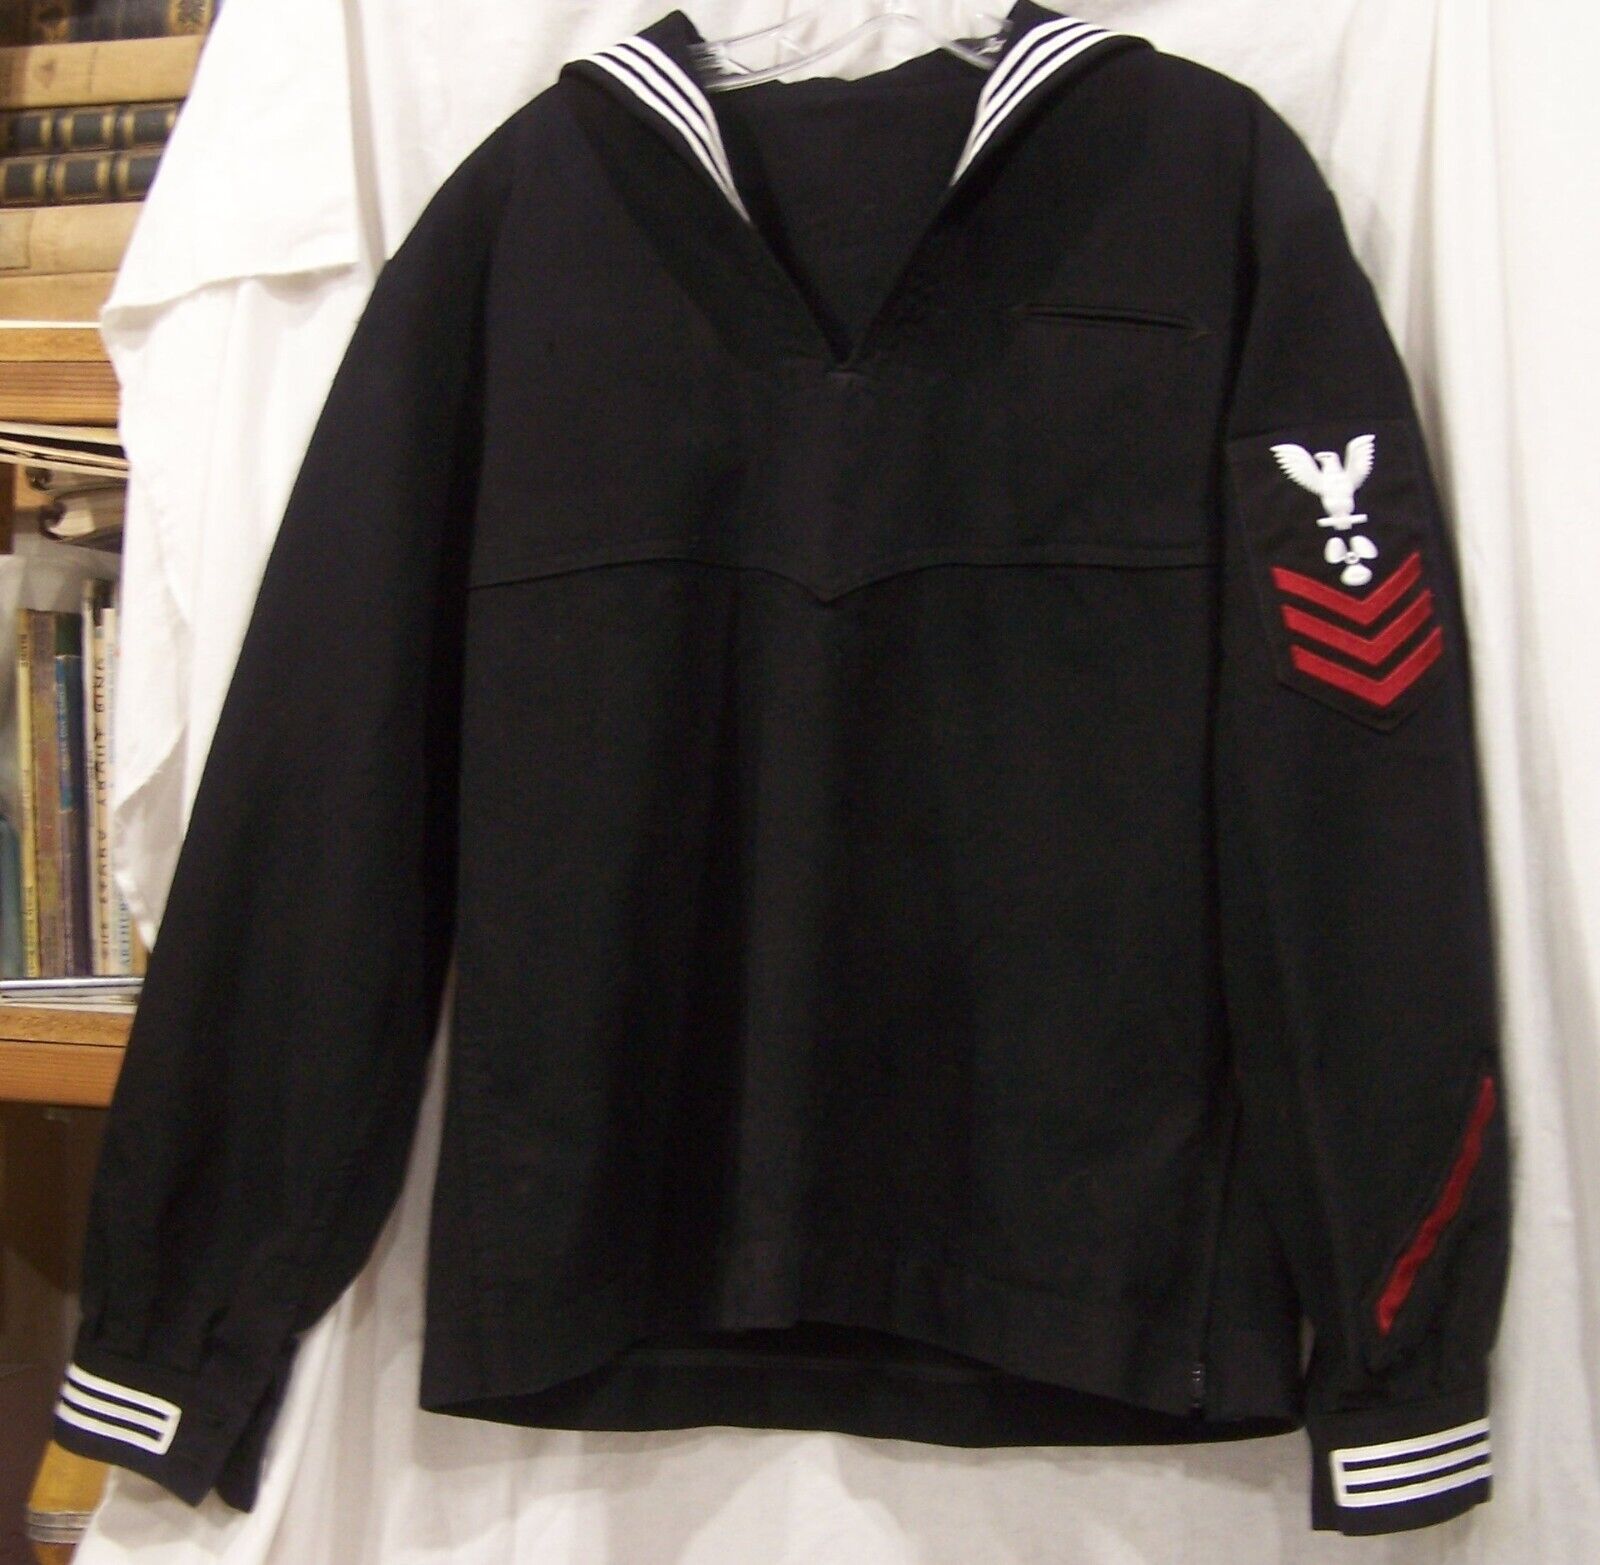 US Navy Wool Cracker Jack Sailor Uniform Jumper Shirt Top Naval Size 46L